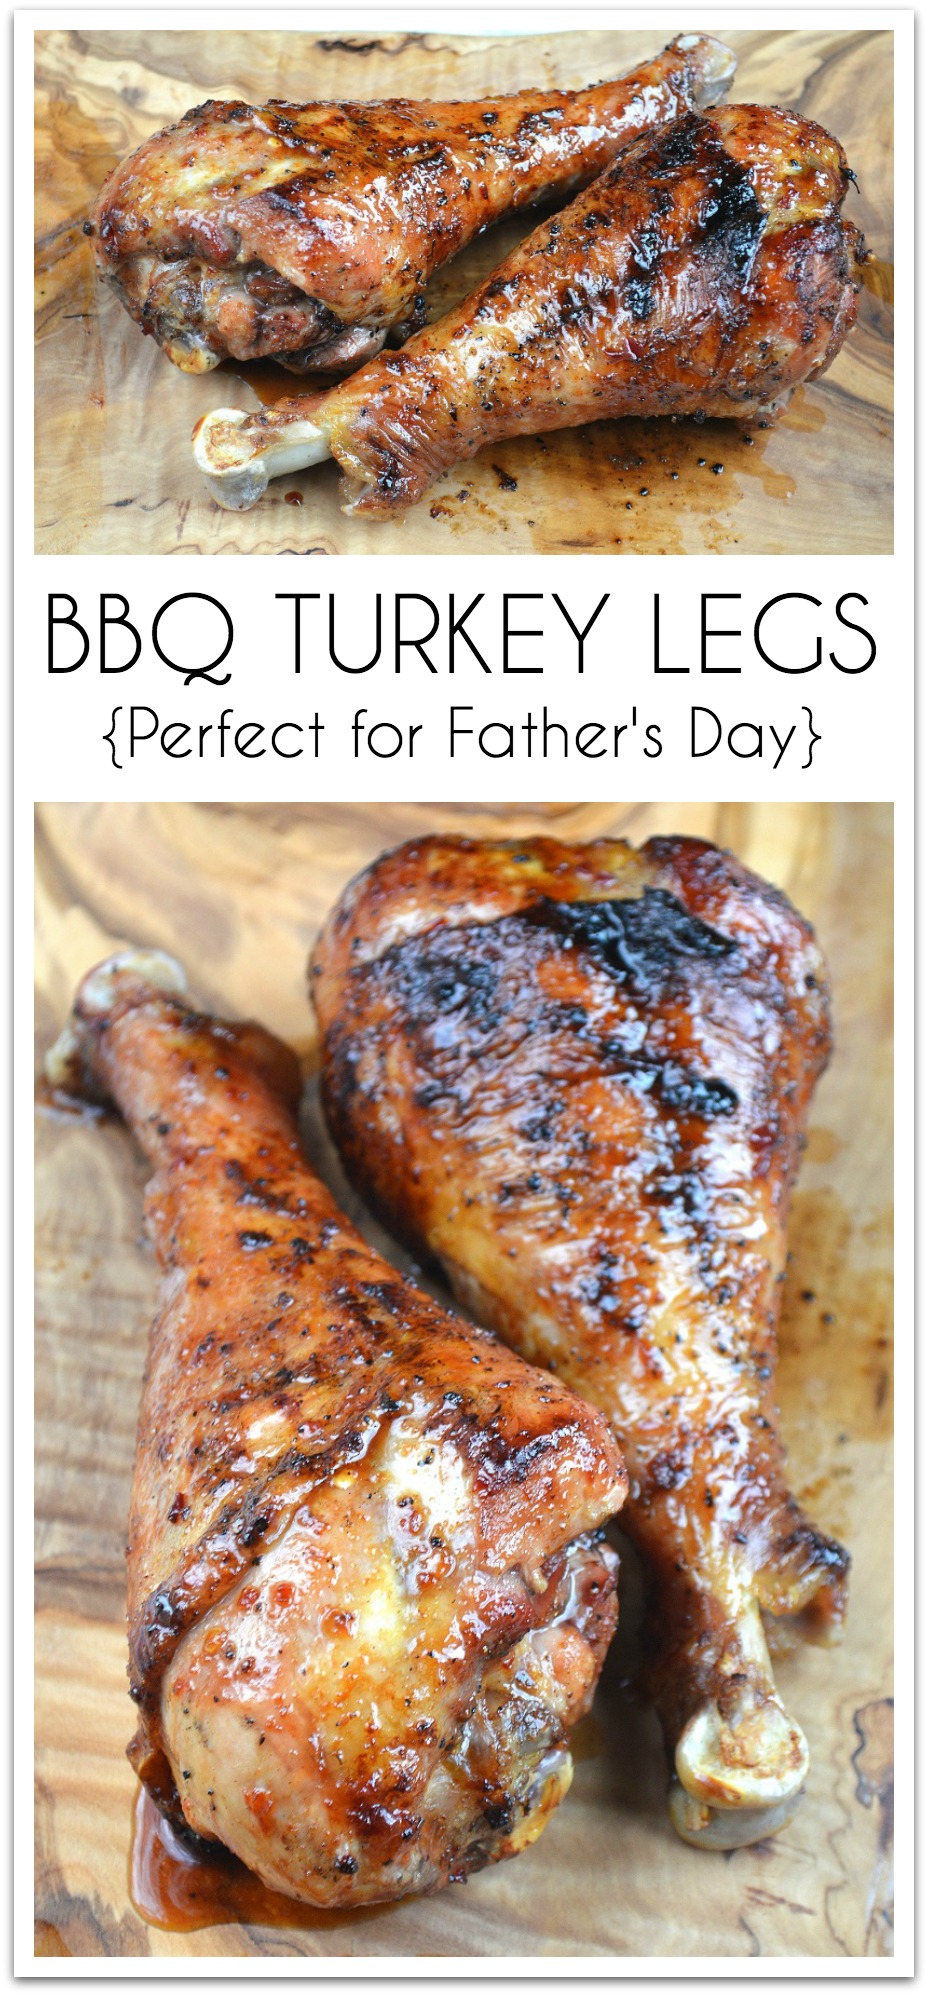 Grilled Turkey Leg Recipe